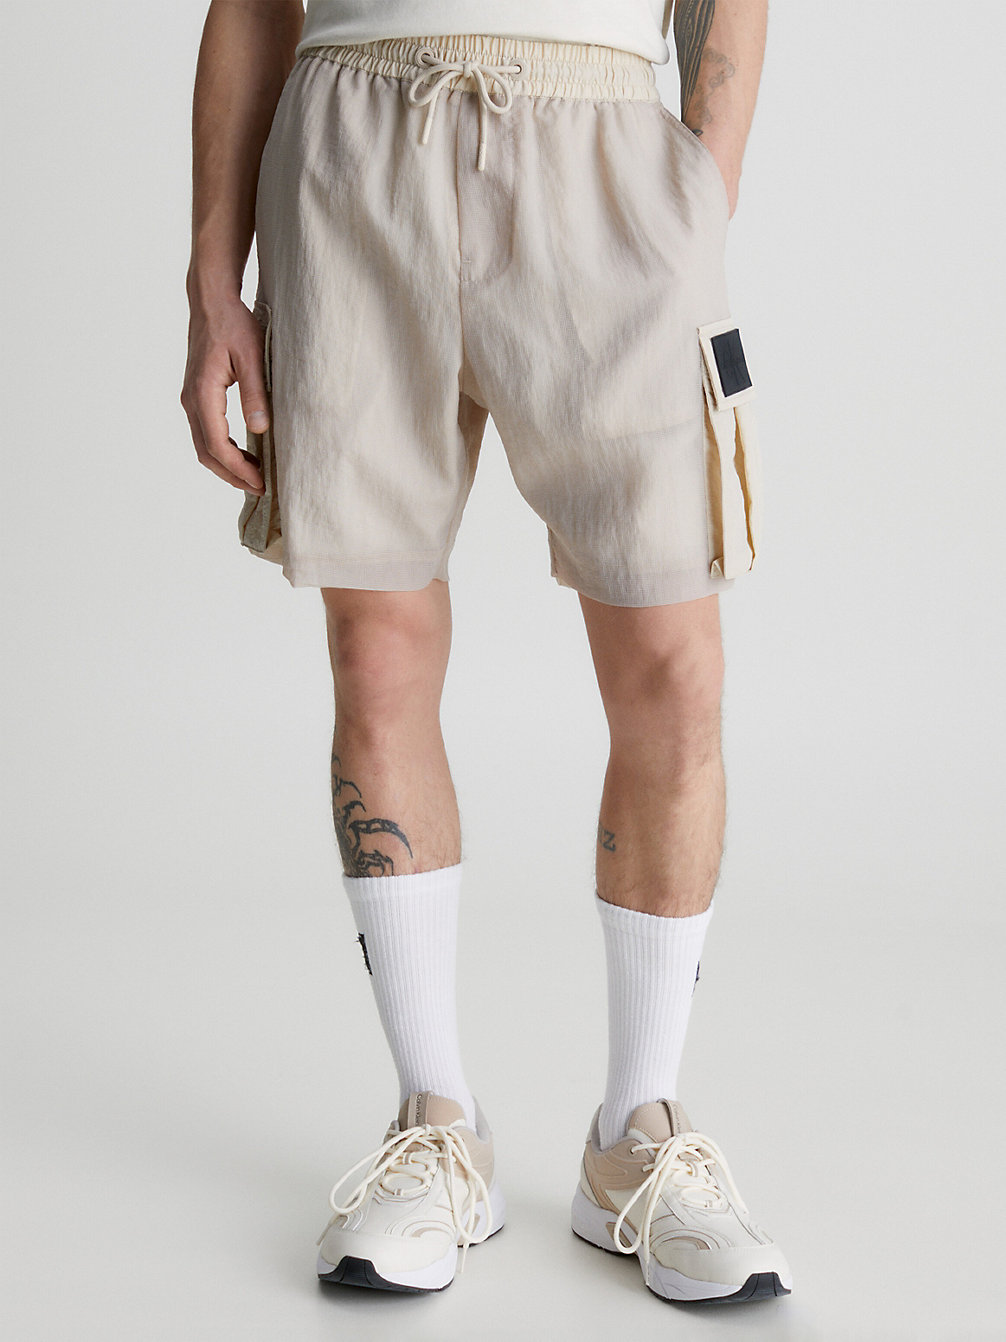 Men's Shorts | Denim, Chino & Cargo Shorts | Calvin Klein®